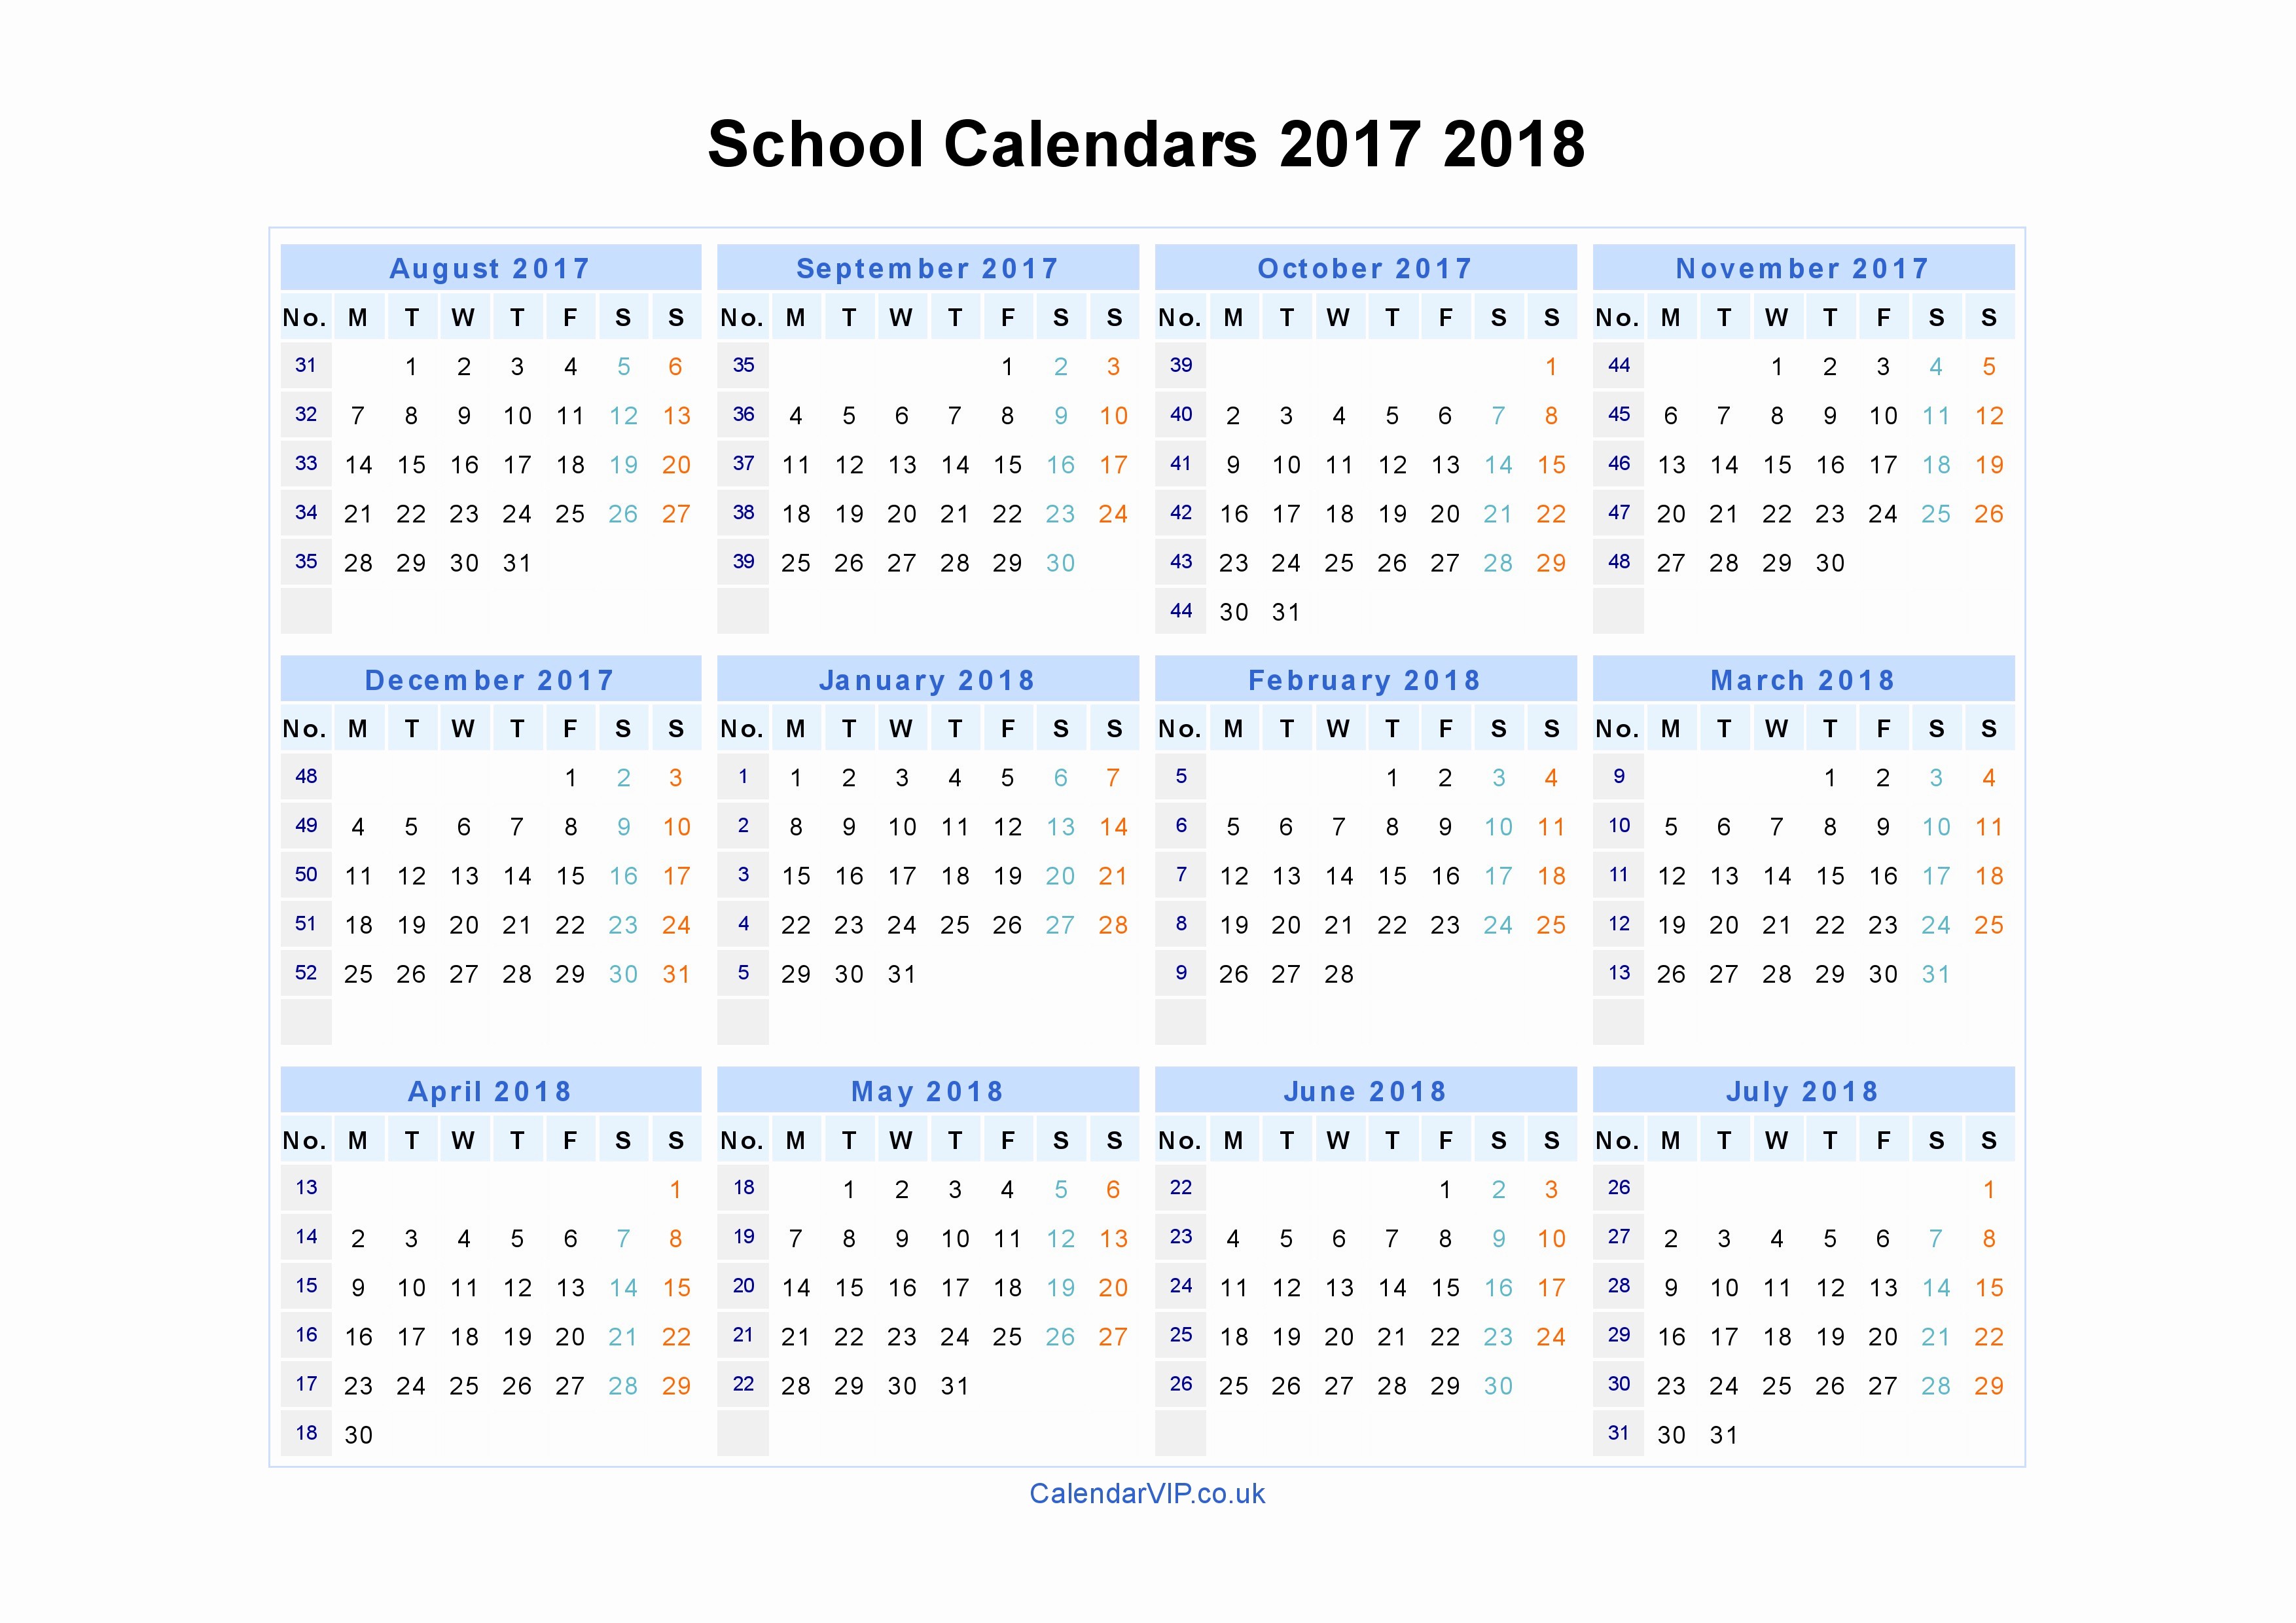 2017-2018 Printable Calendar Inspirational School Calendars 2017 2018 Calendar From August 2017 to